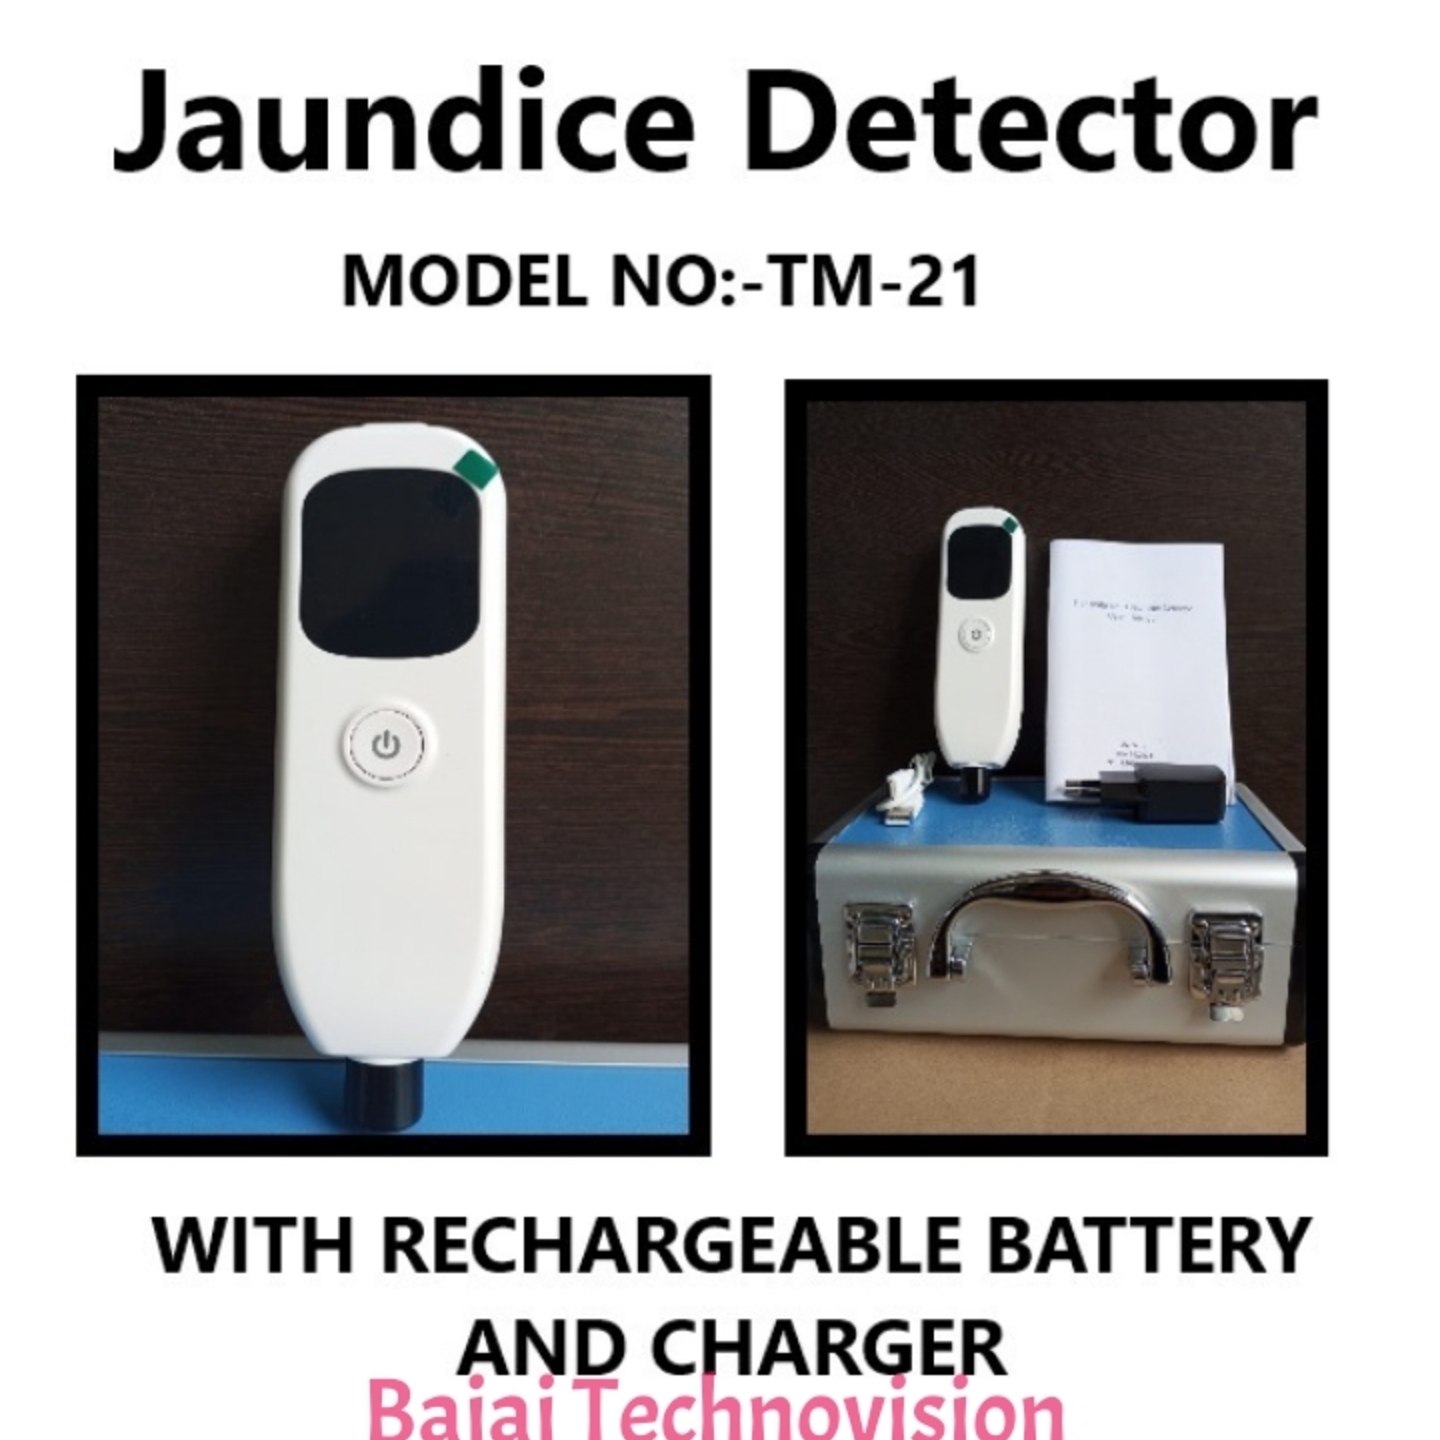 Jaundice Detector